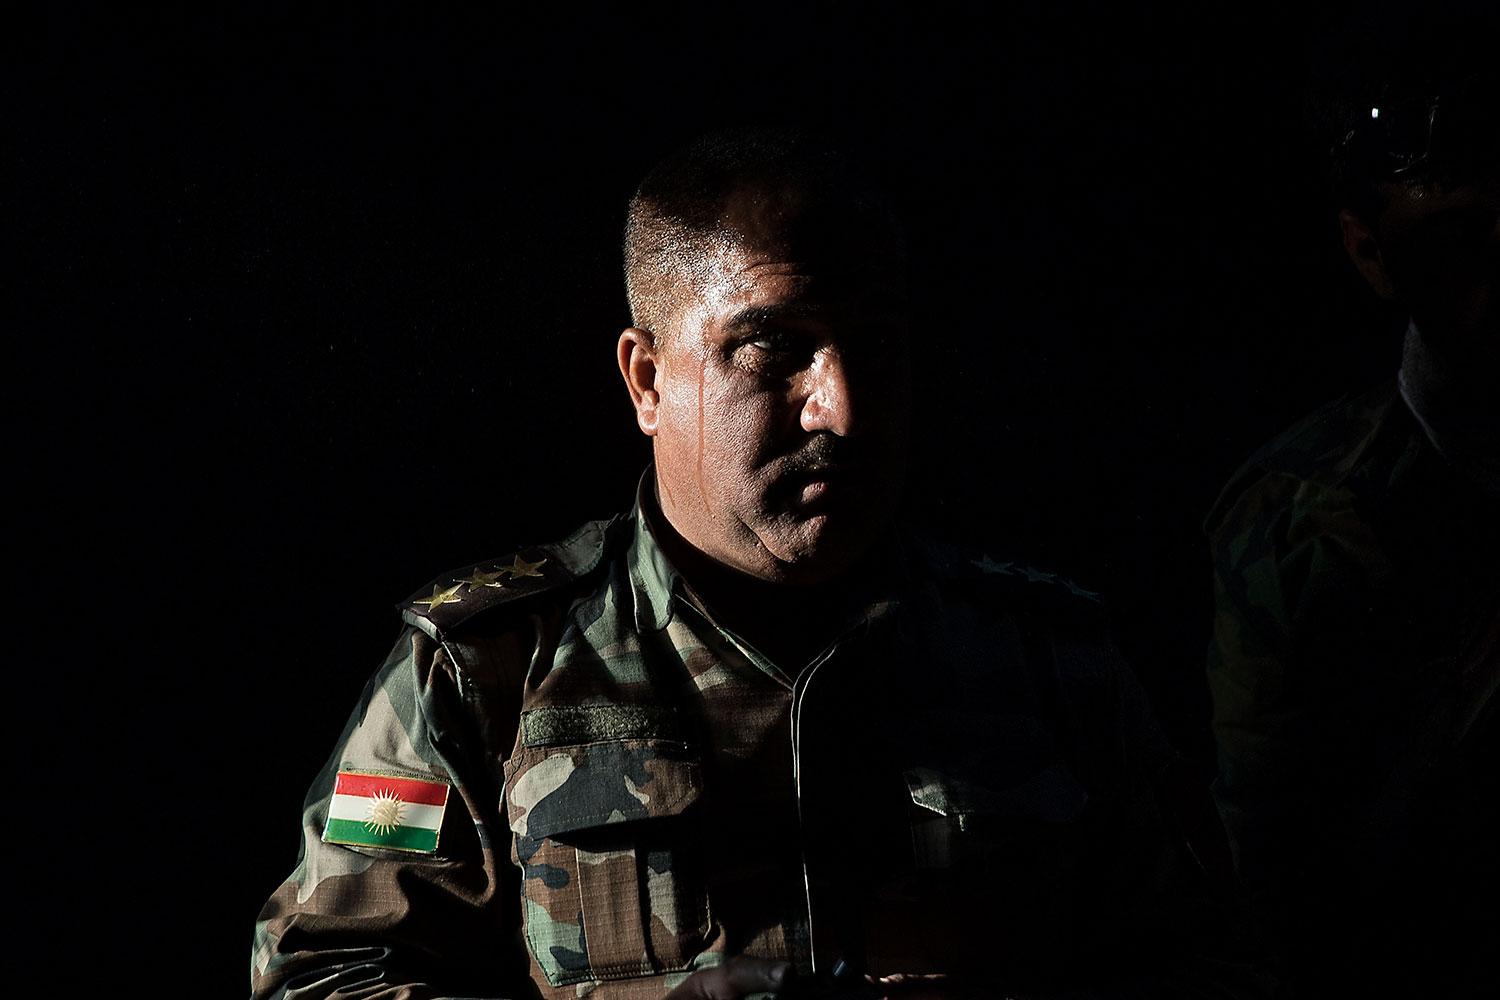 En kurdisk soldat som deltagit i striderna mot IS.